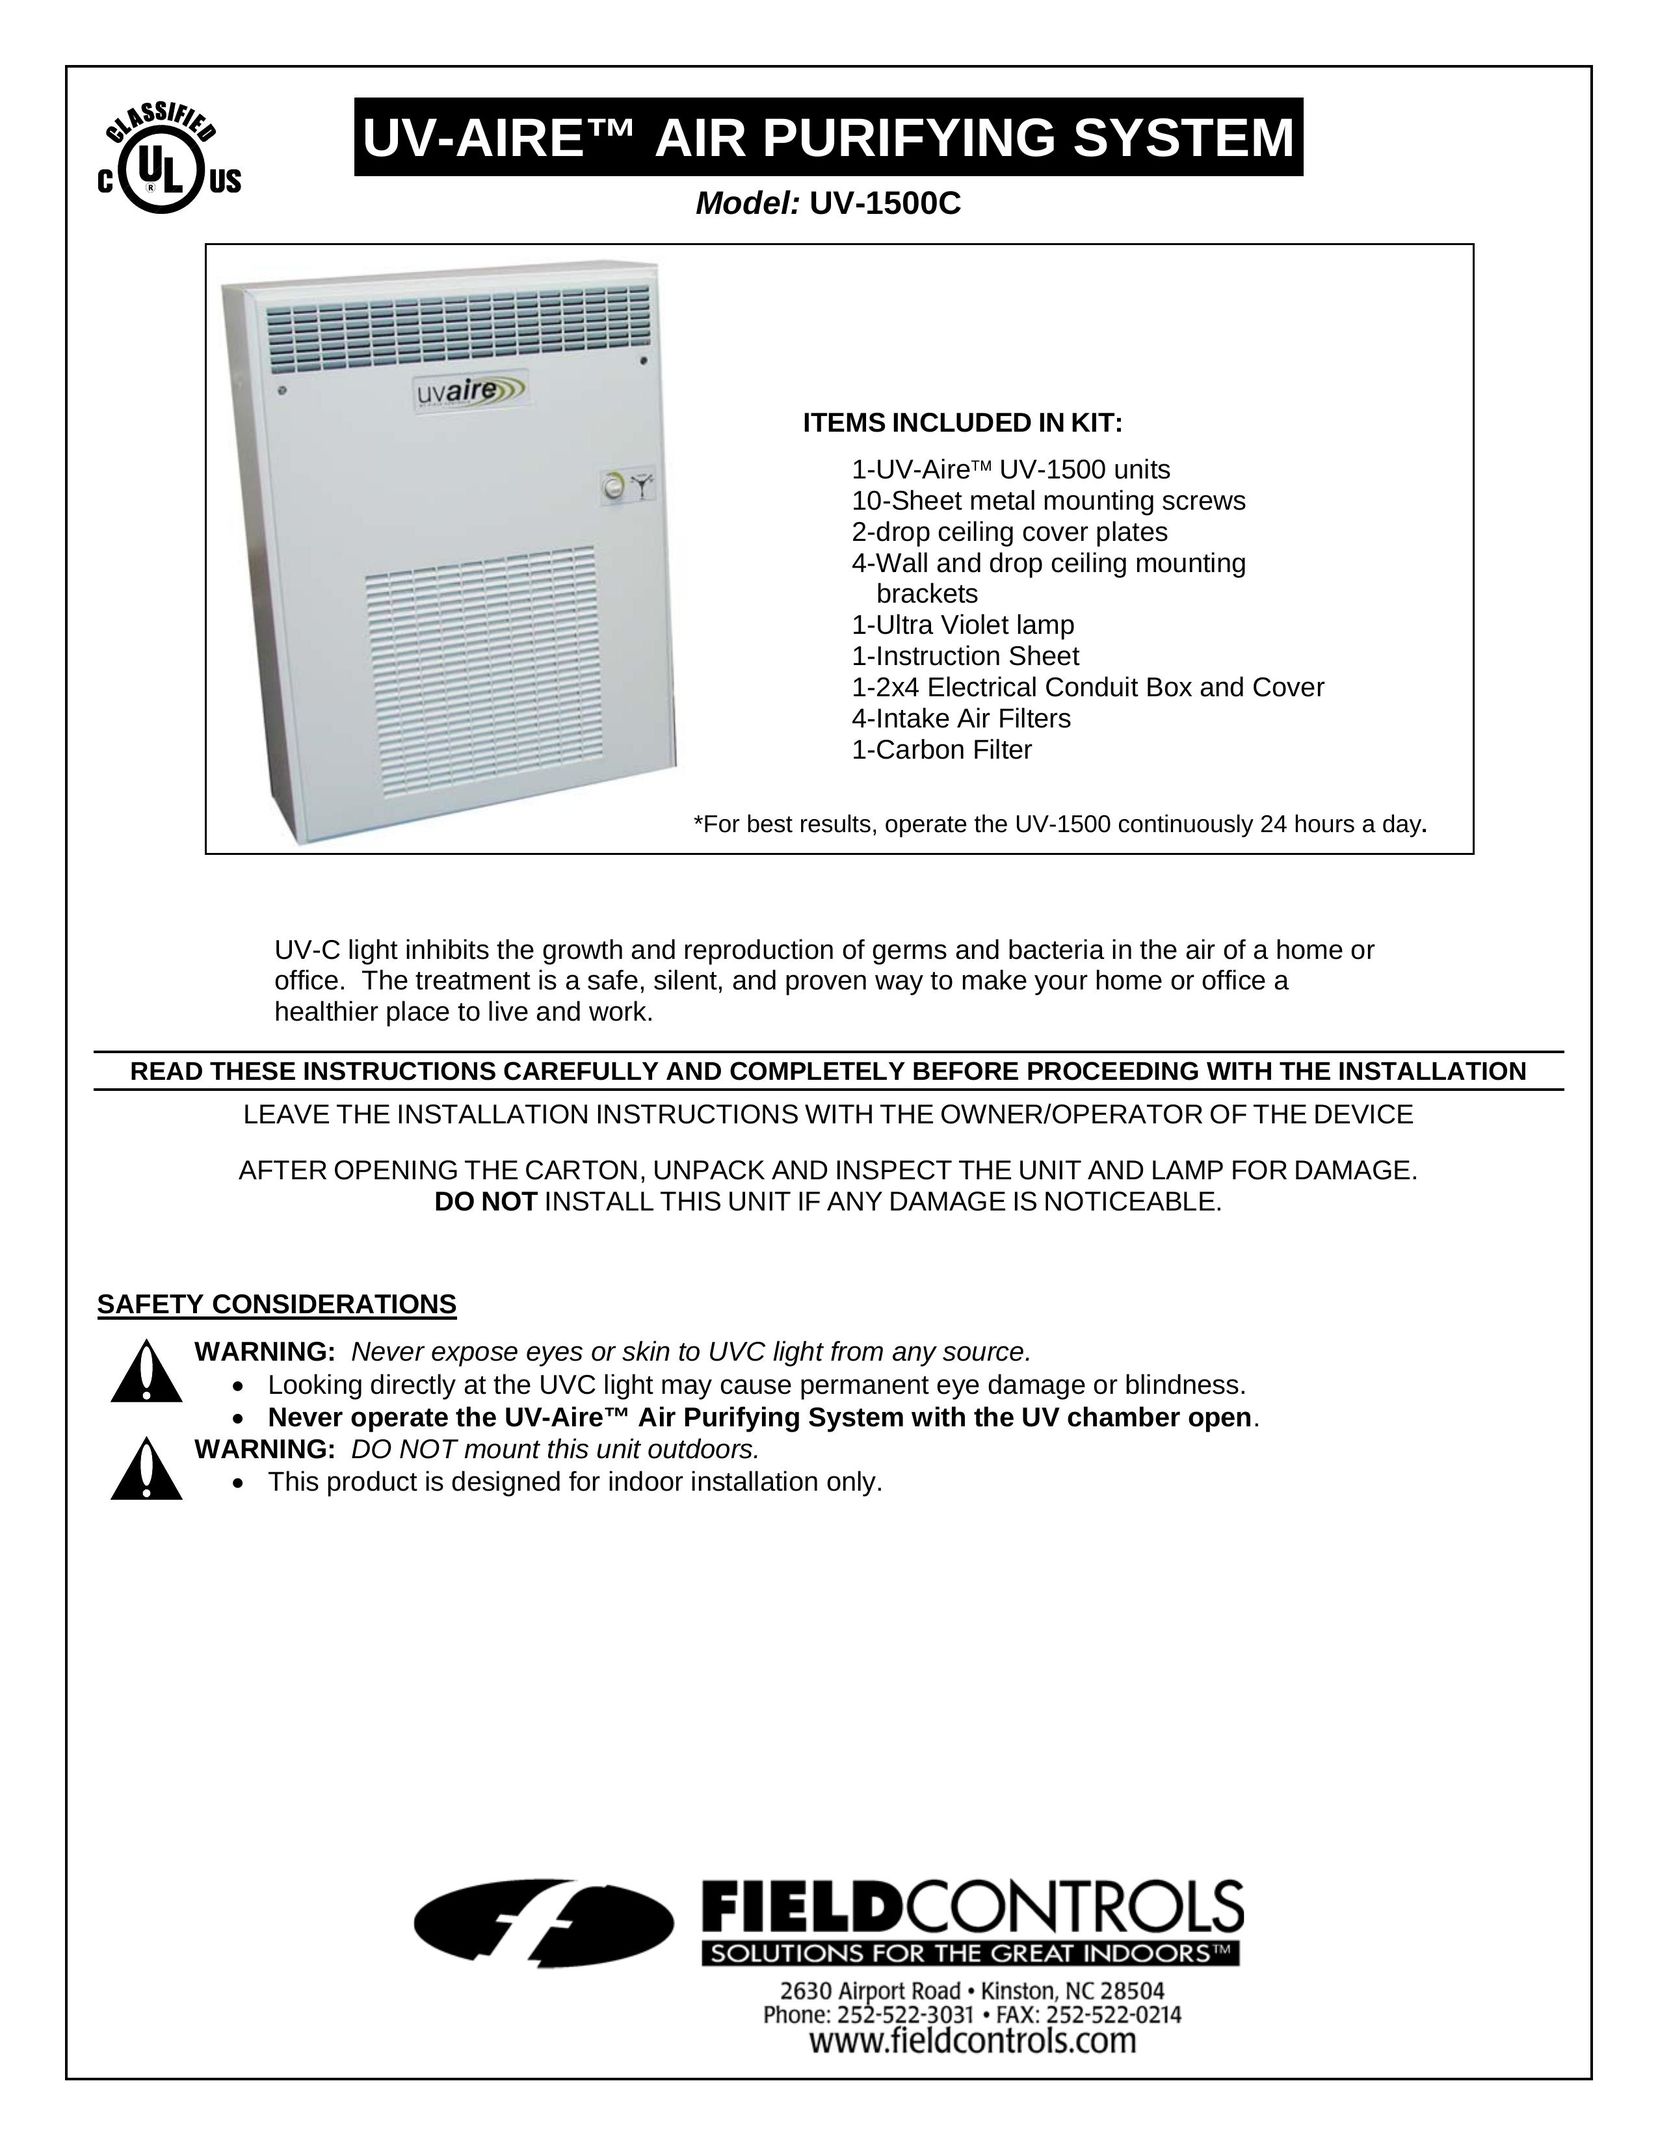 Field Controls UV-1500C Air Cleaner User Manual